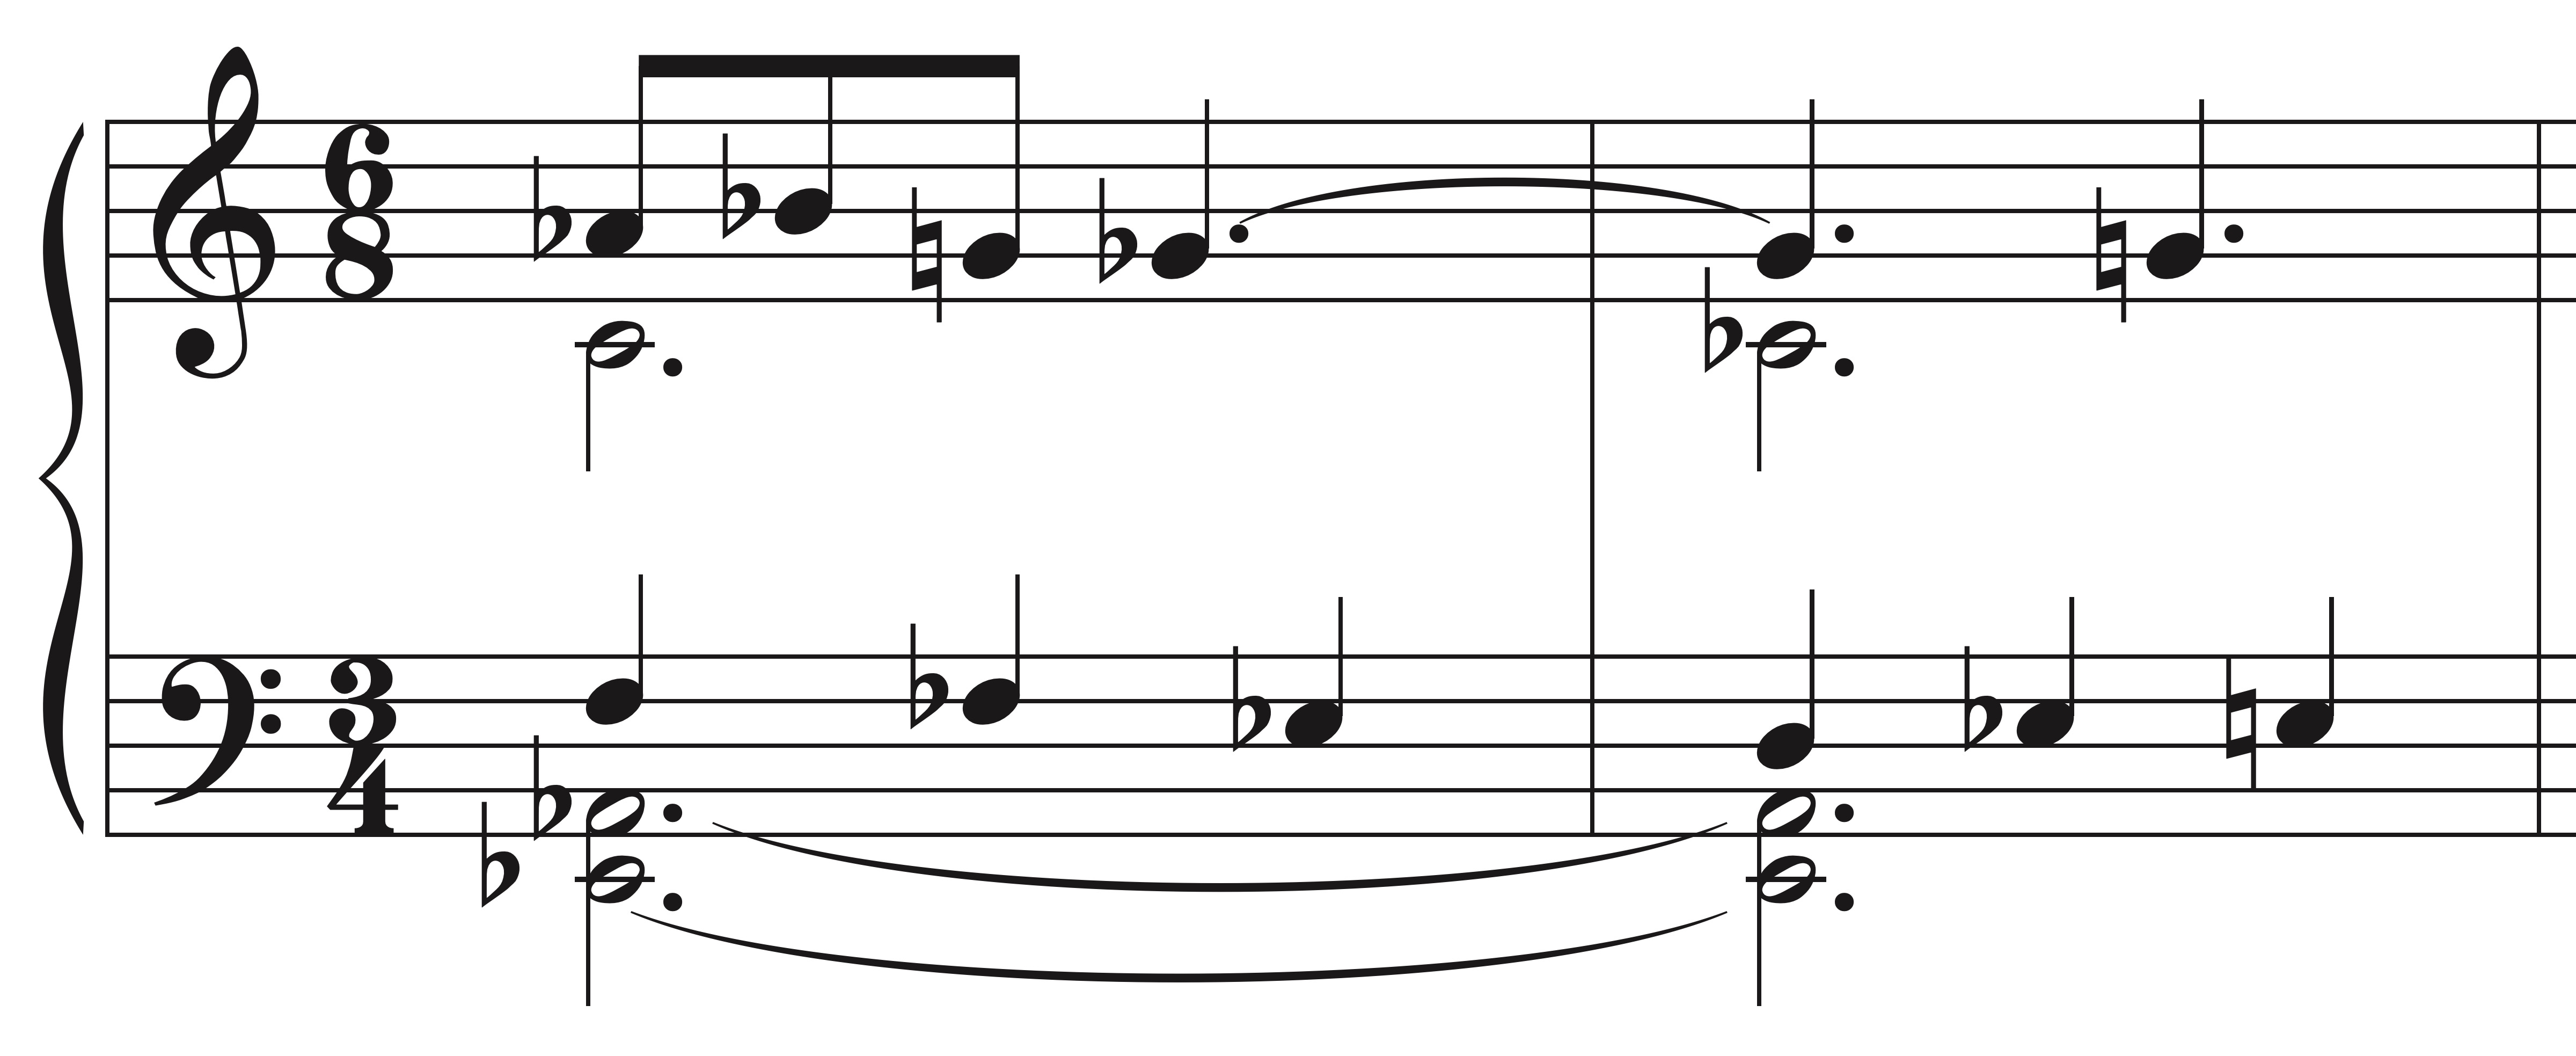 Scriabin sheet music. More description below.